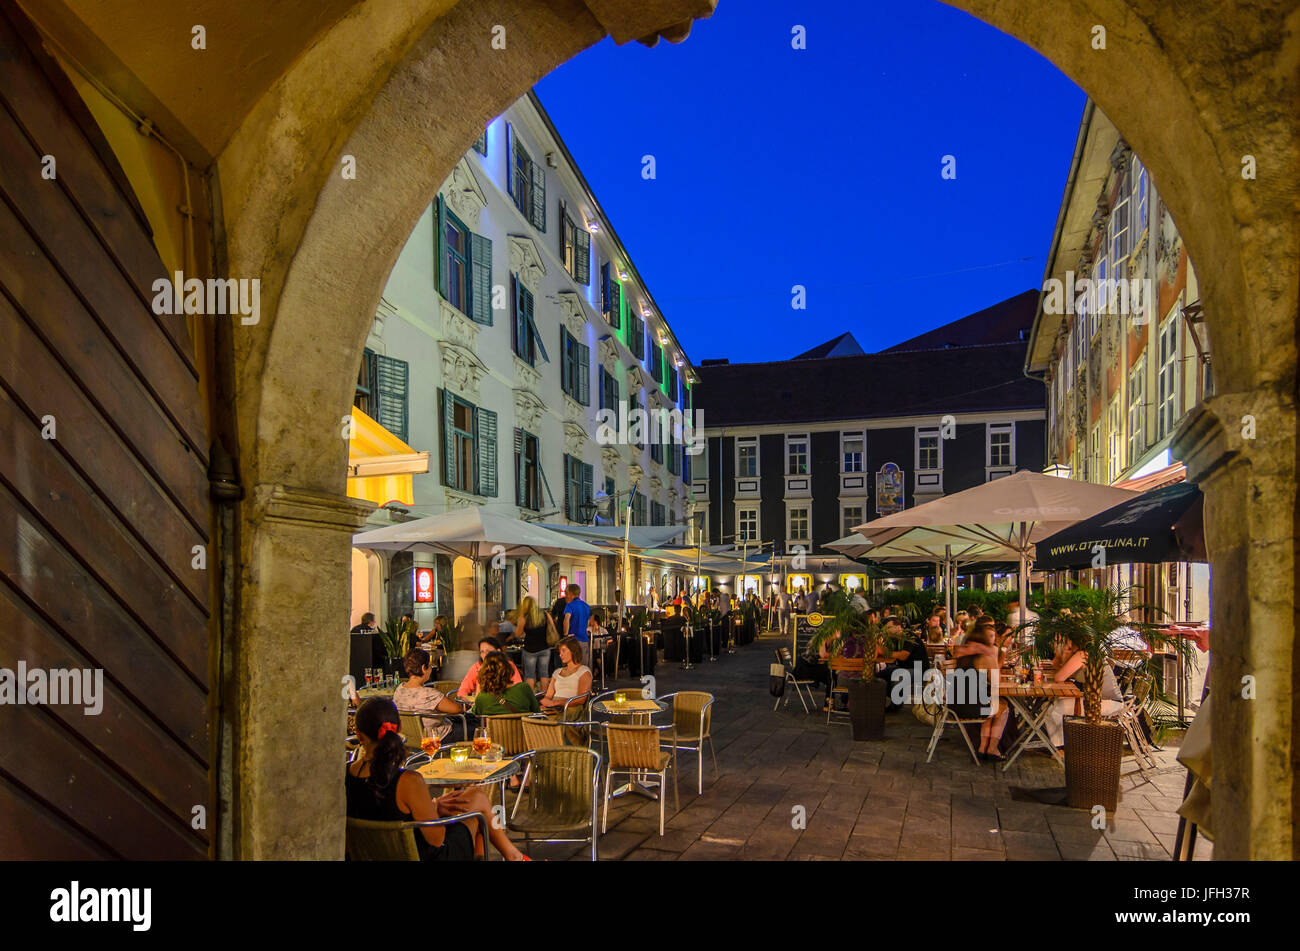 Mehlplatz with the palace Inzaghi and restaurant, Austria, Styria, region Graz, Graz Stock Photo